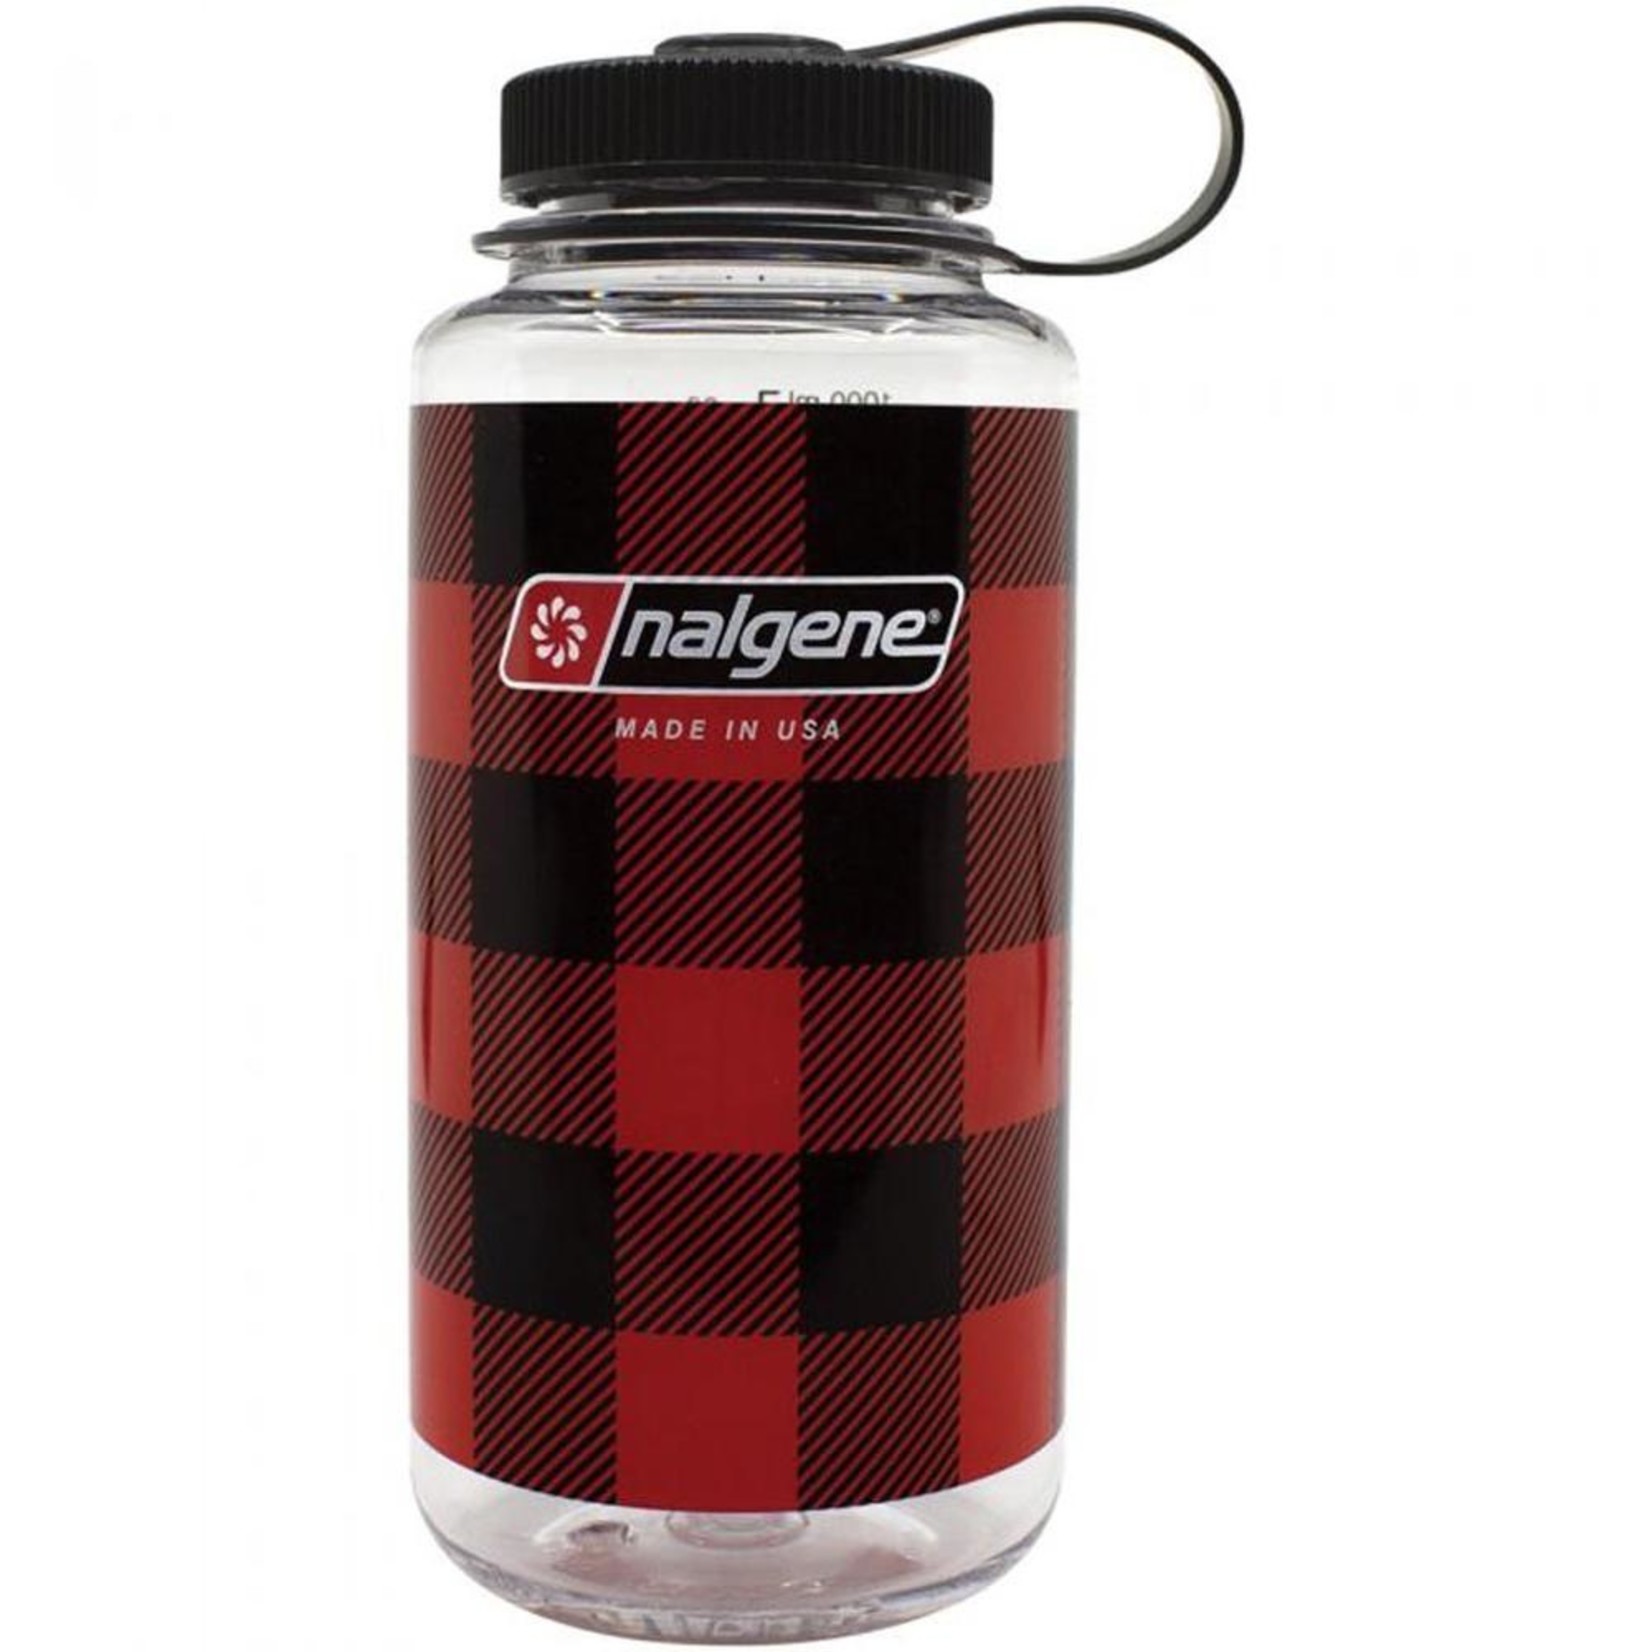 NALGENE Nalgene Limited Edition Wide Mouth Water Bottle Volume: 32 oz, RED PLAID